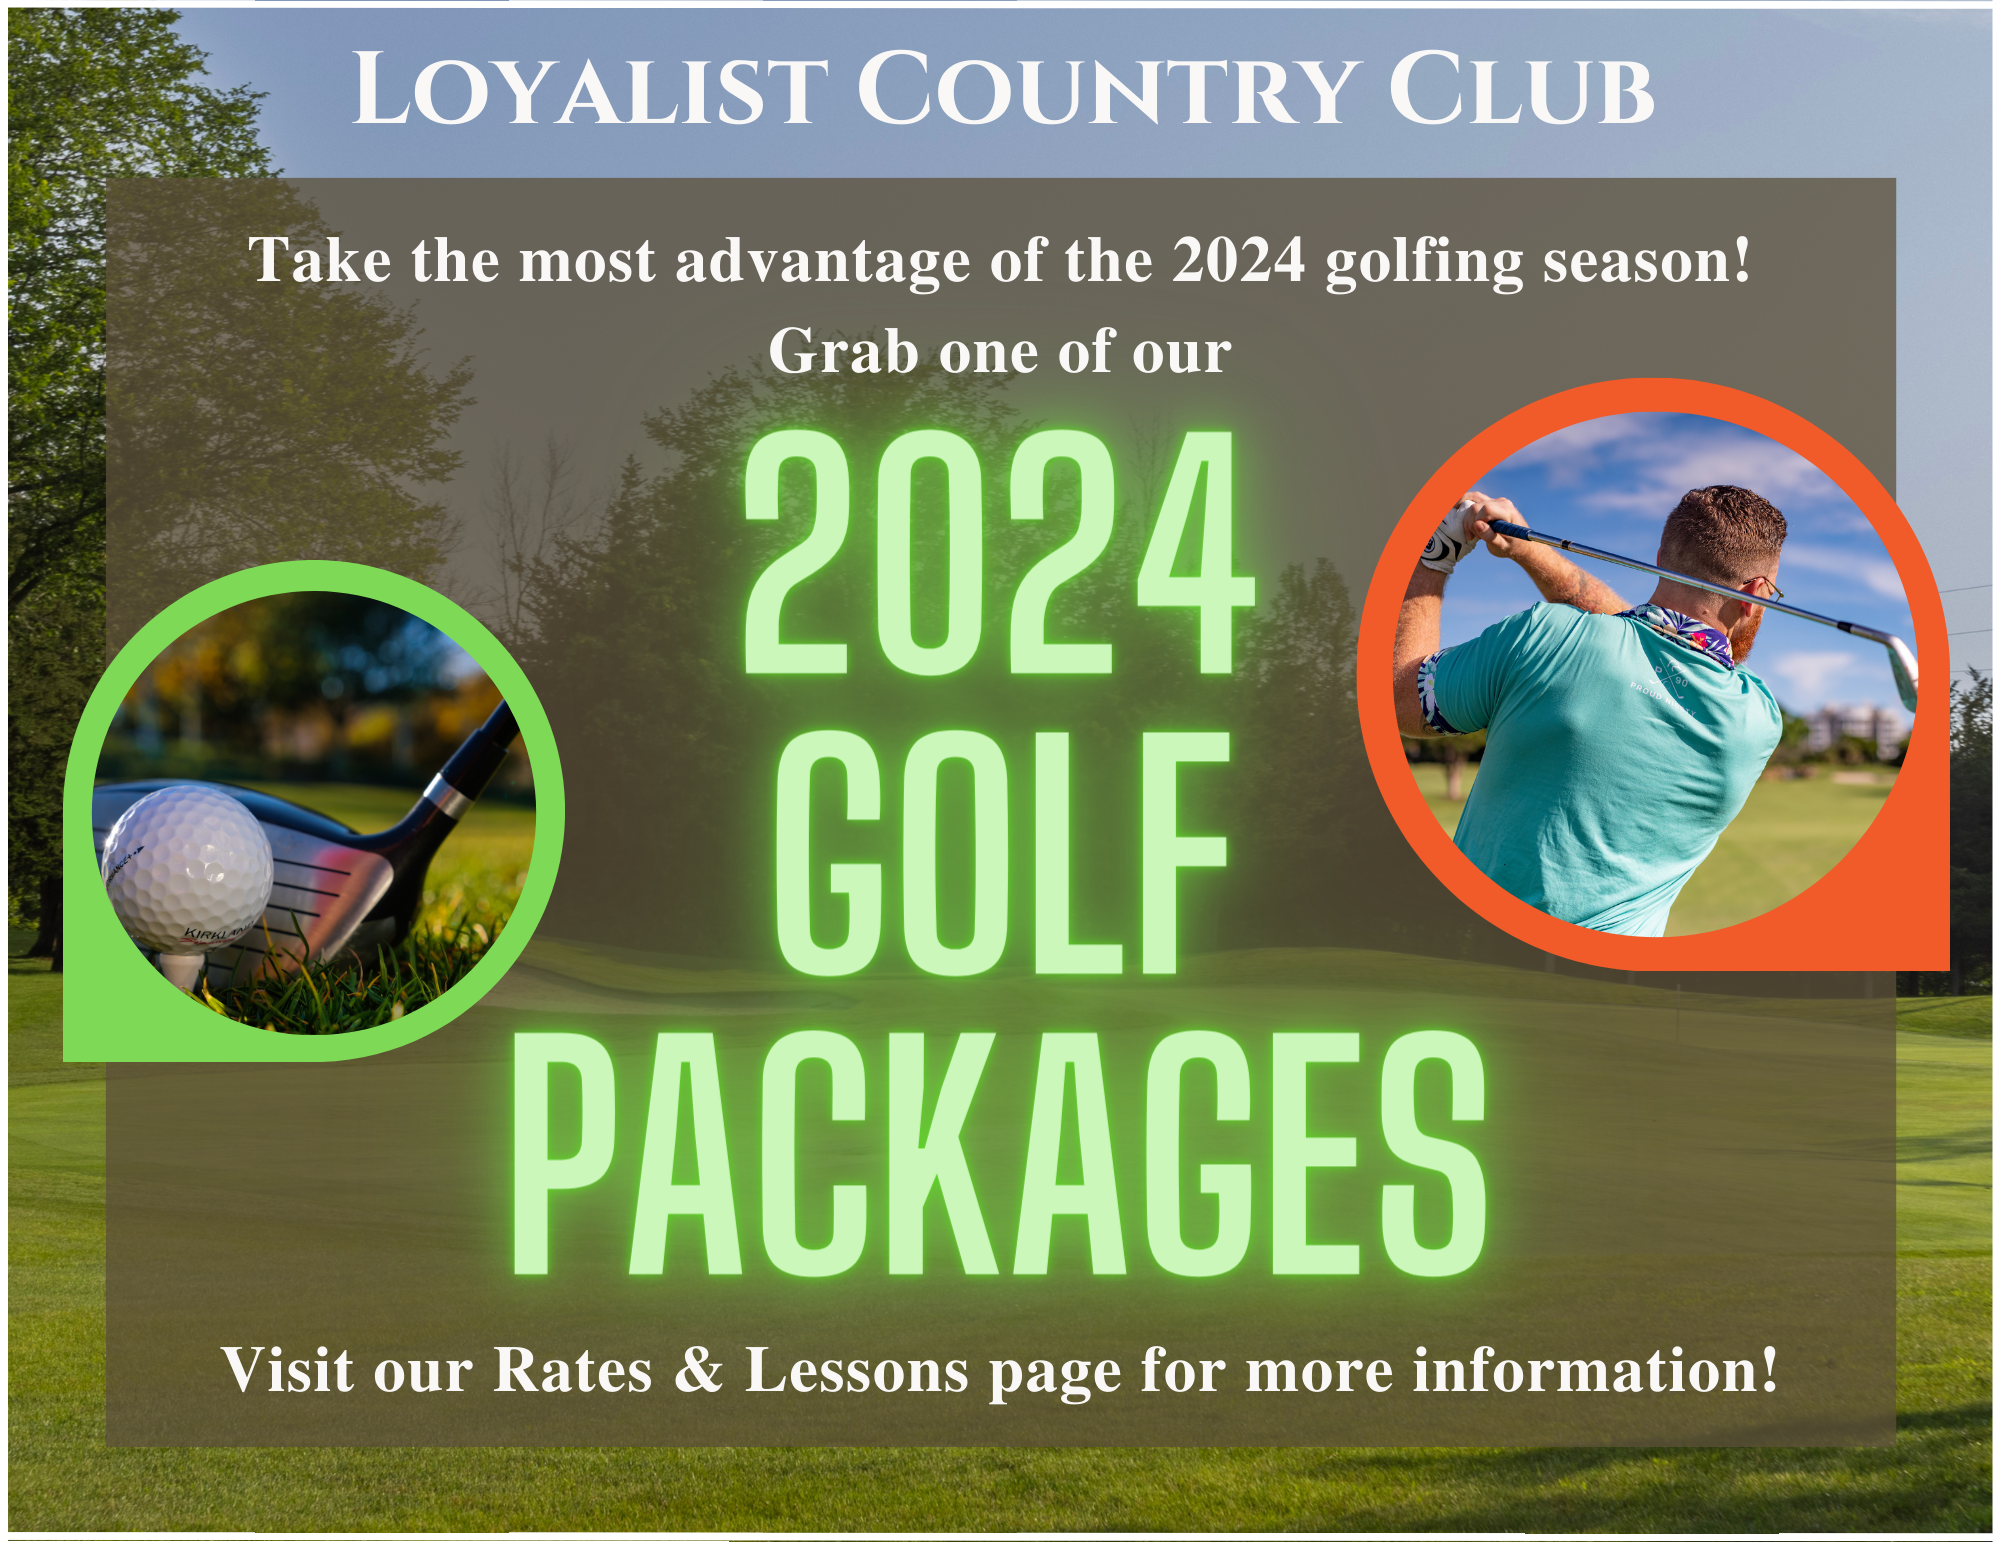 golf package photo for 2024 golf season